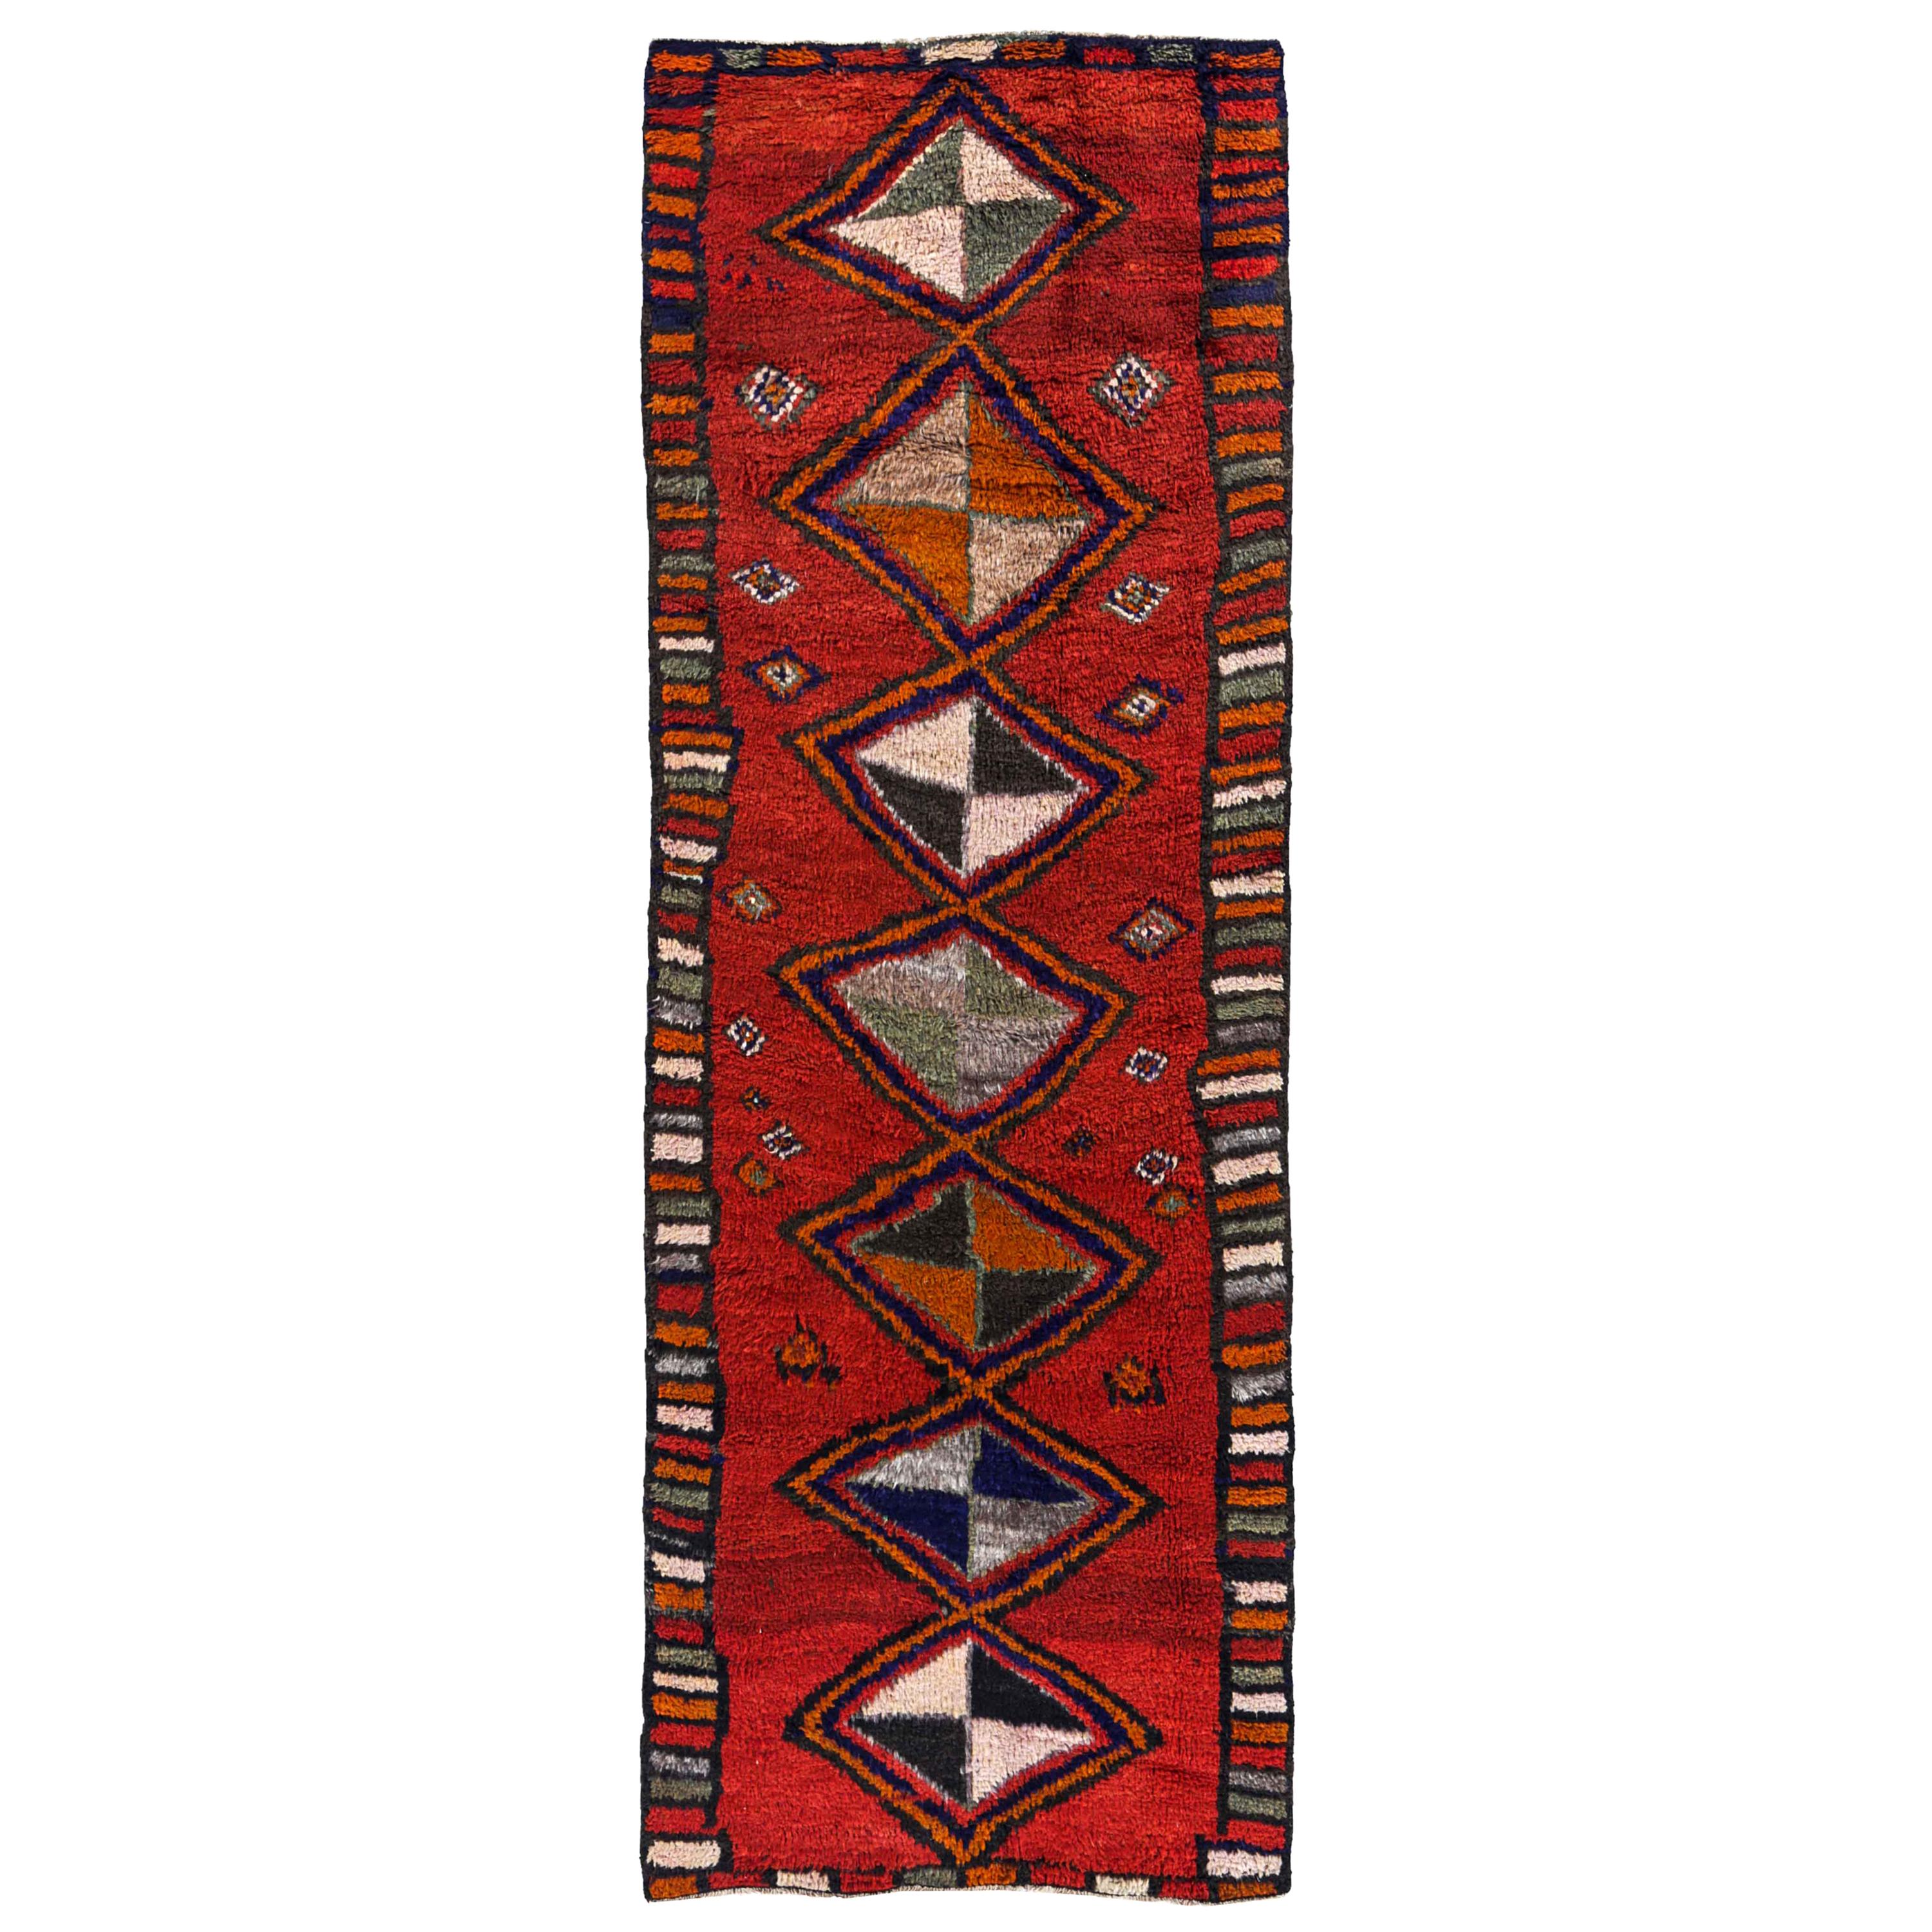 Antique Persian Runner Rug Gabbeh Design For Sale